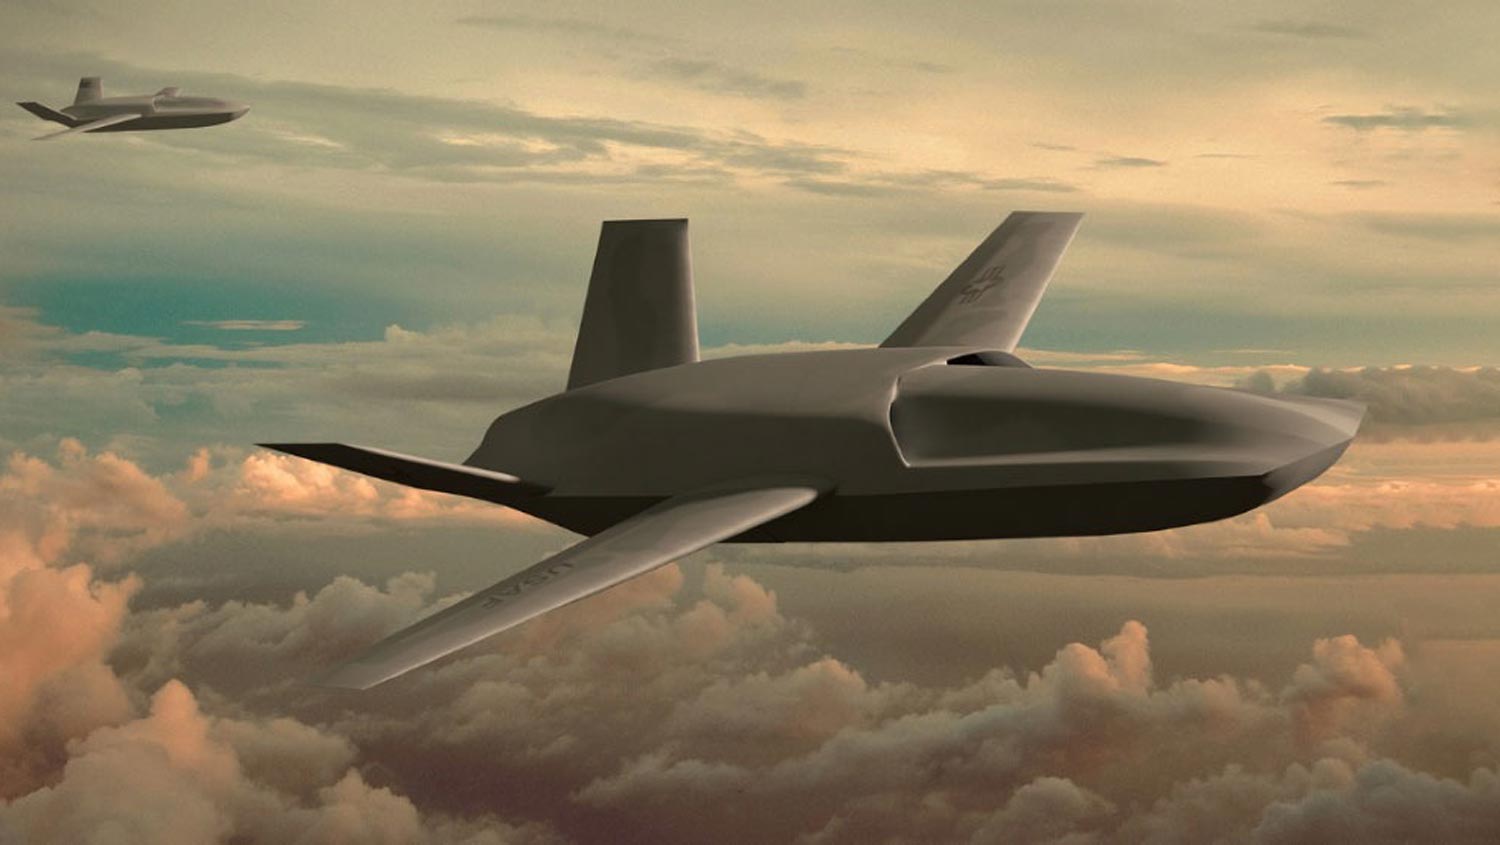 General Atomics Gambit Ialah Dron Yang Direka Untuk Bekerjasama Dengan Pesawat Pejuang